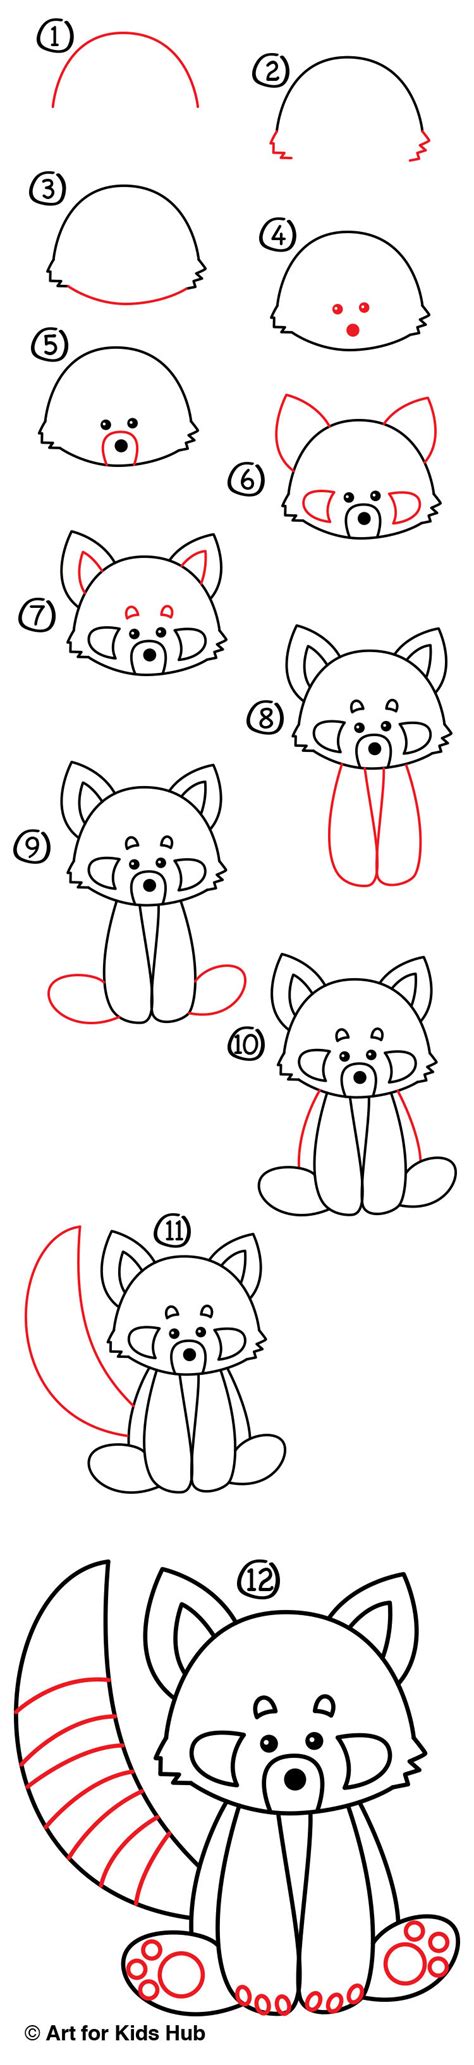 Easy Drawings For Kids Panda